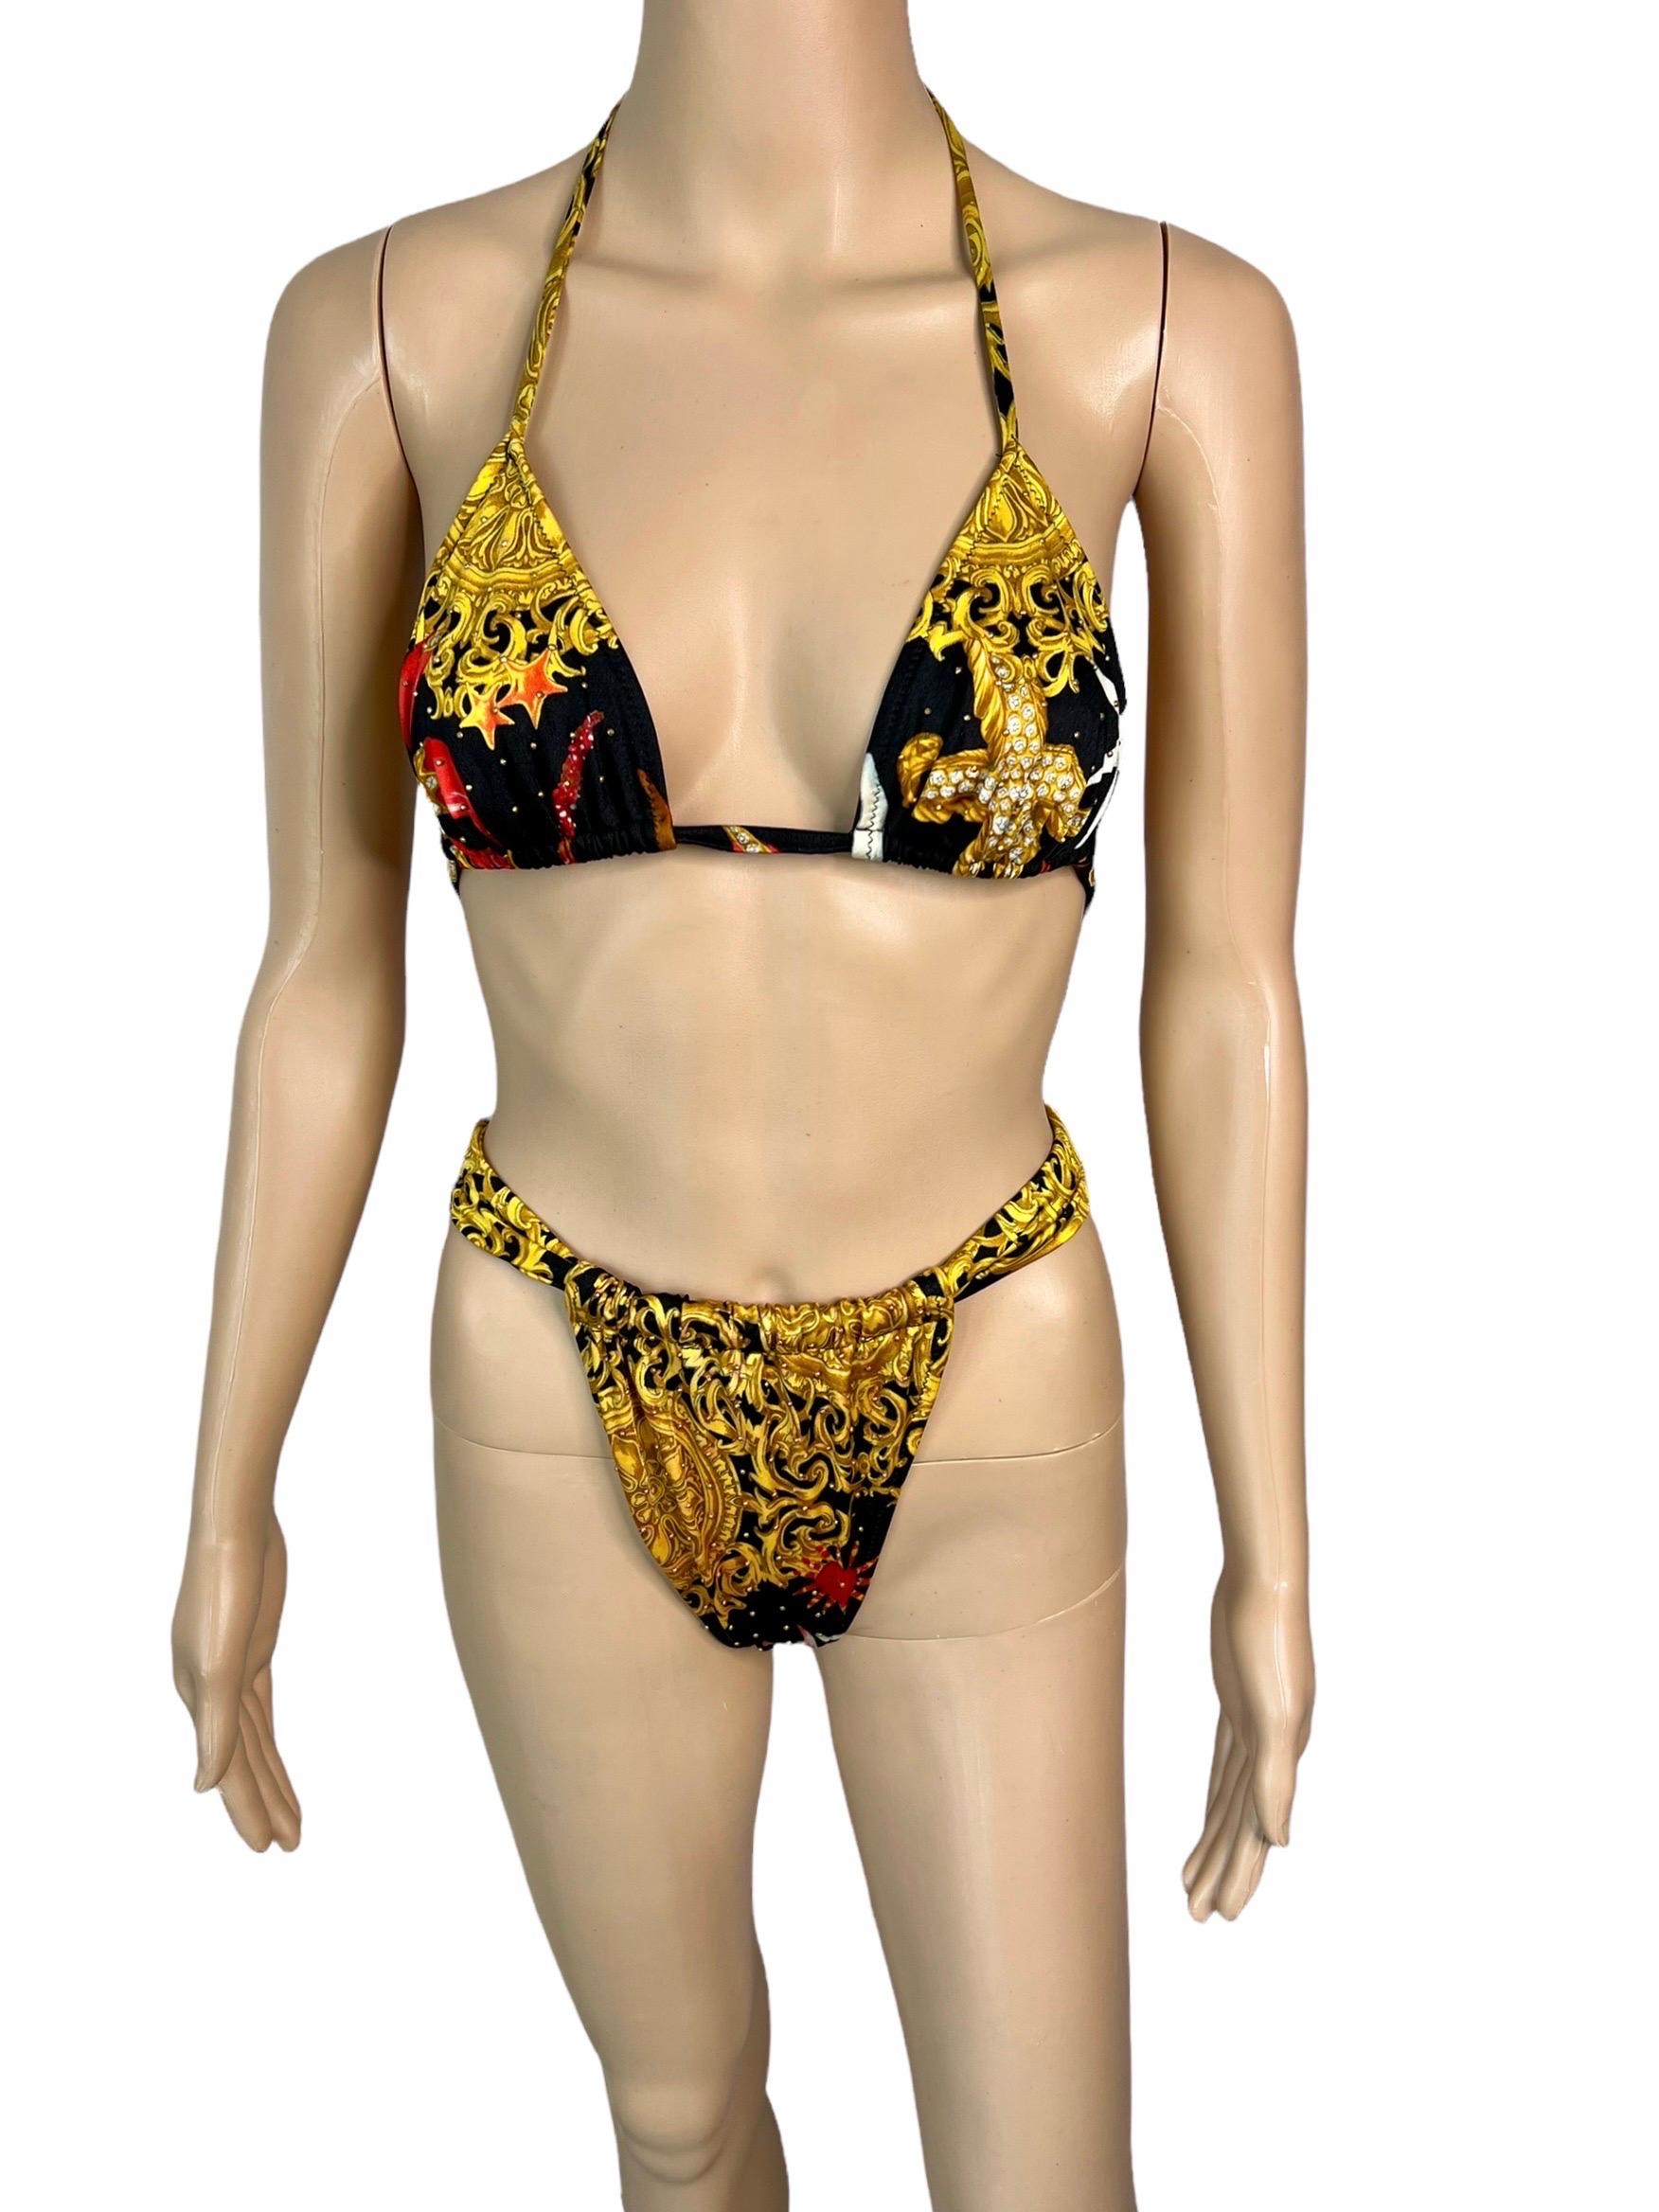 Gianni Versace S/S 1992 Baroque Embellished Two-Piece Bikini Swimsuit Swimwear For Sale 8